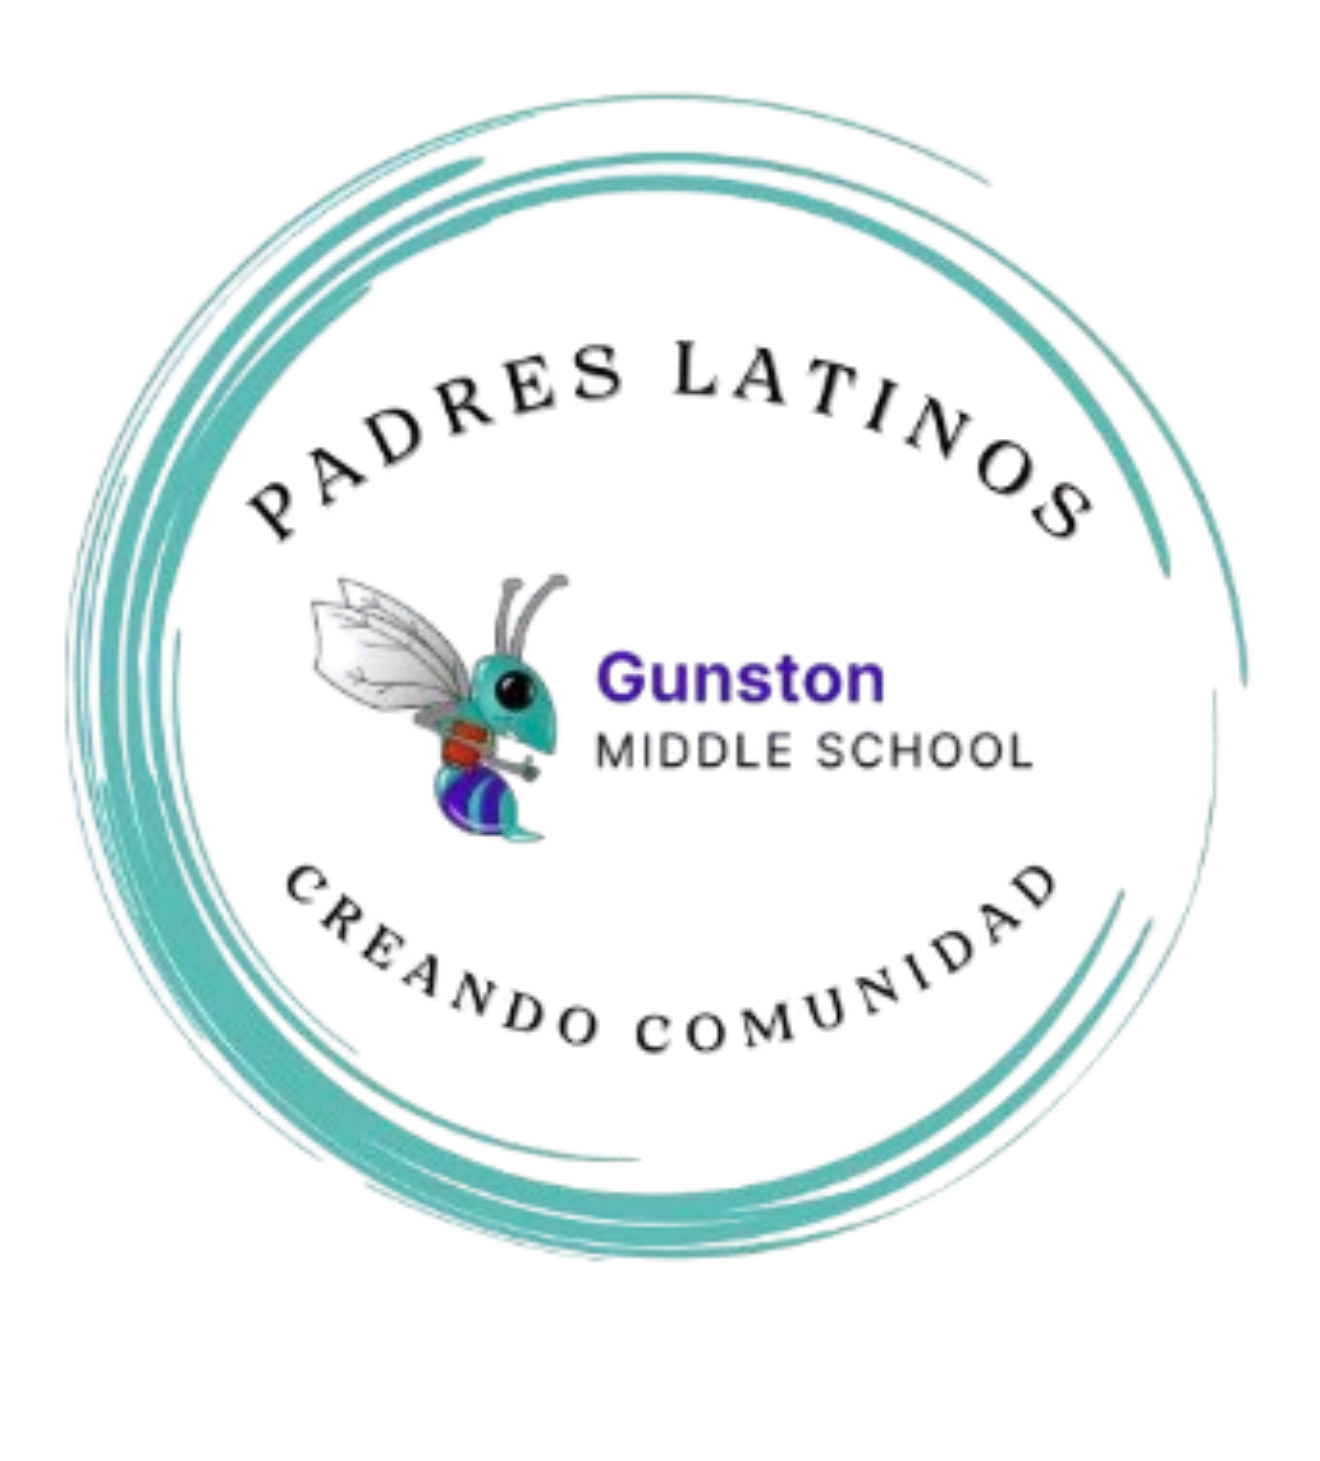 Padres Latinos Logo